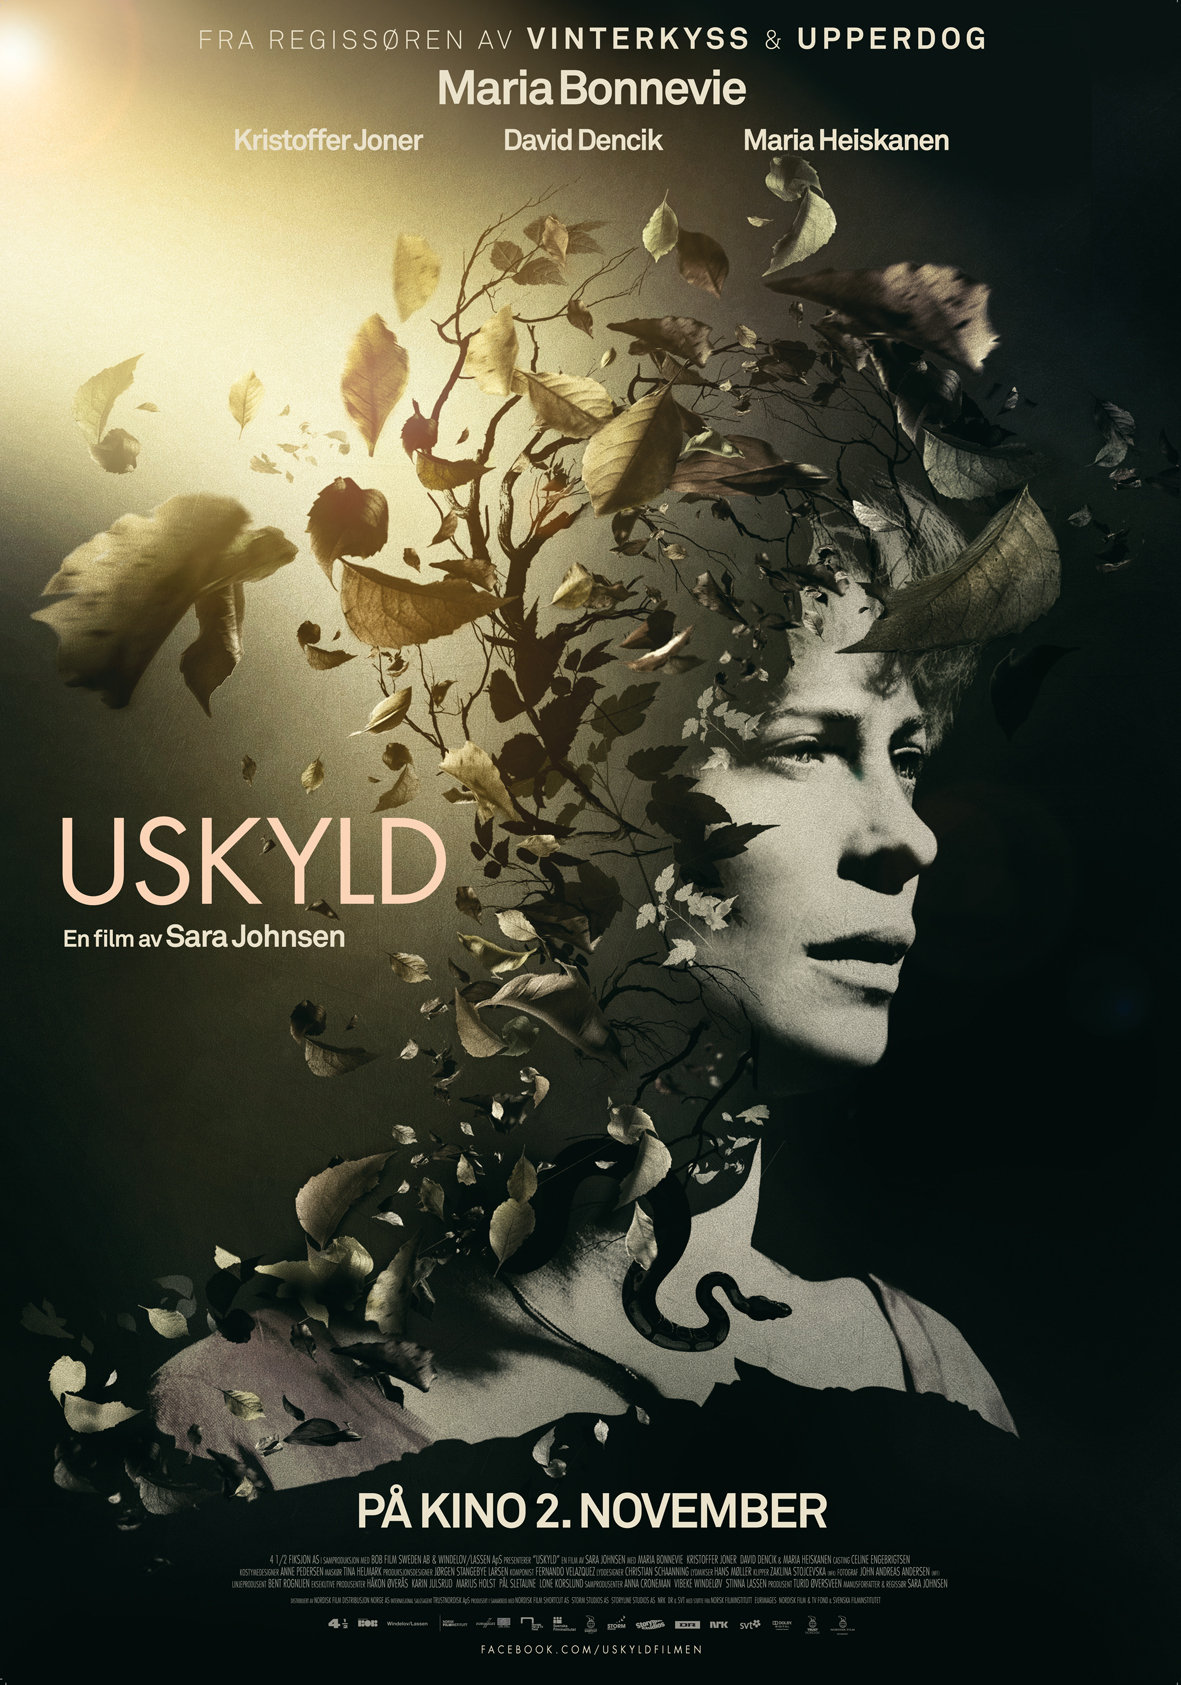 Uskyld (2012) with English Subtitles on DVD on DVD